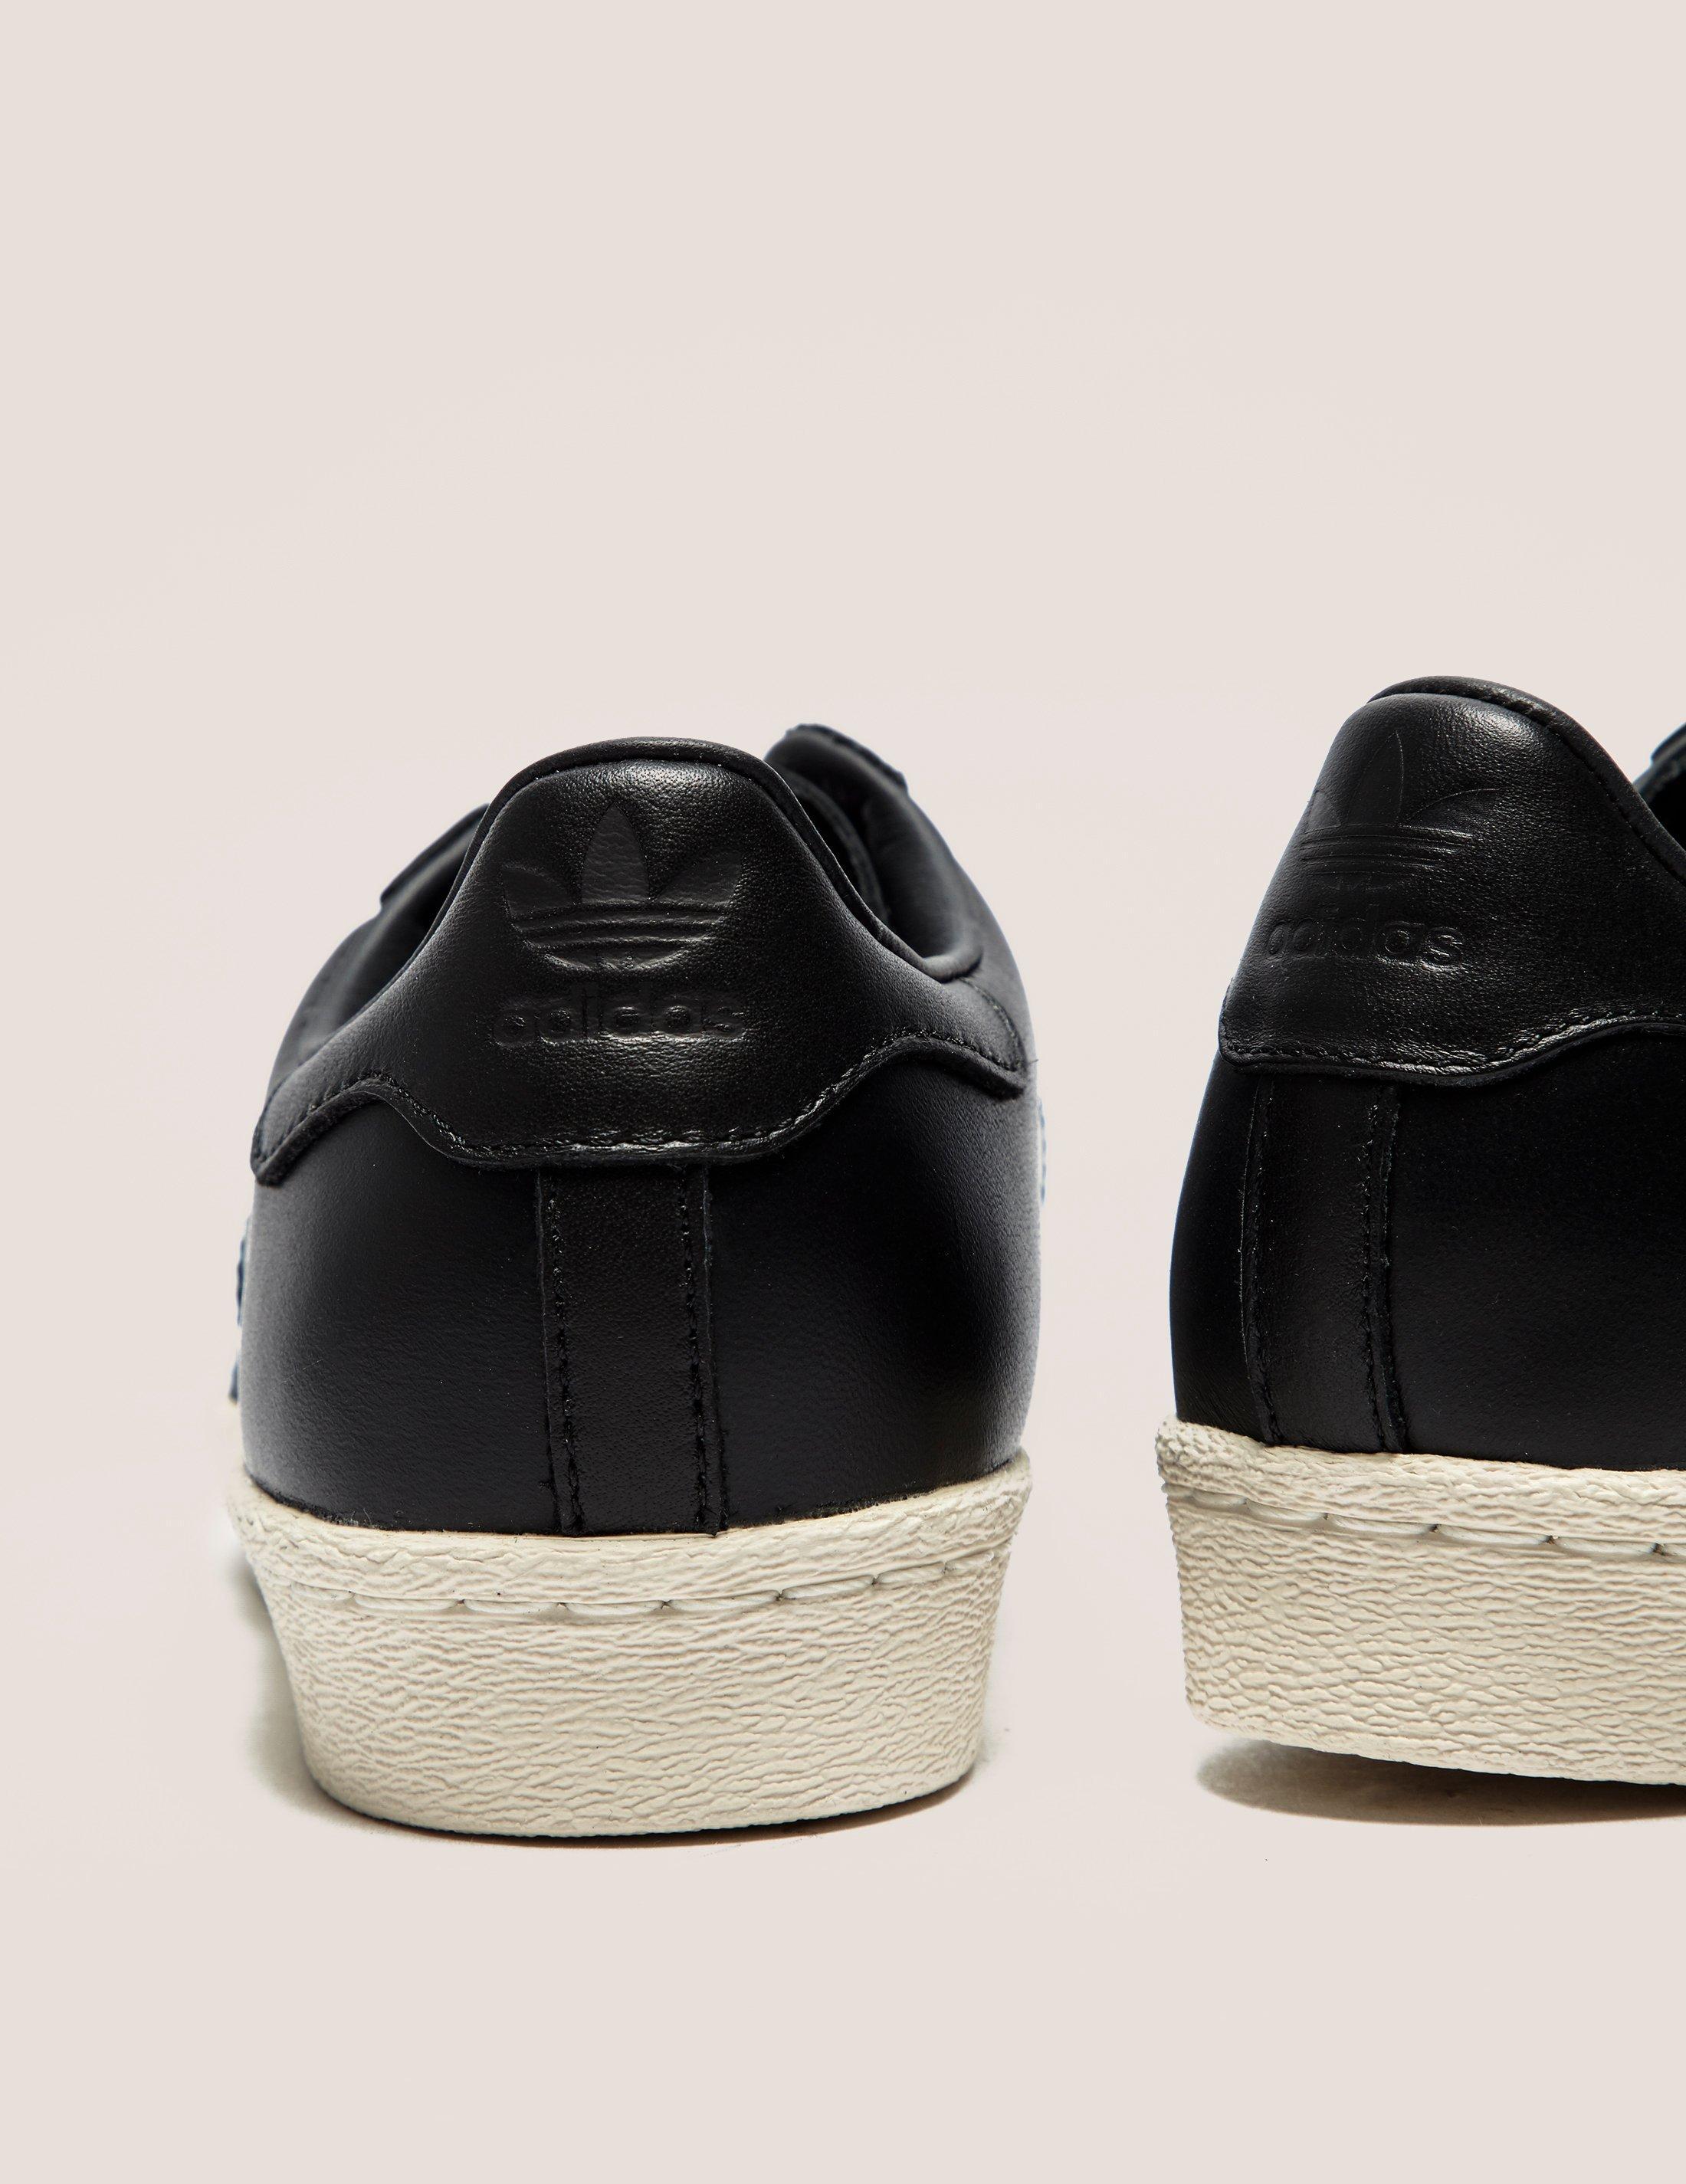 adidas Originals Leather Superstar 80s Metal Toe in Black | Lyst